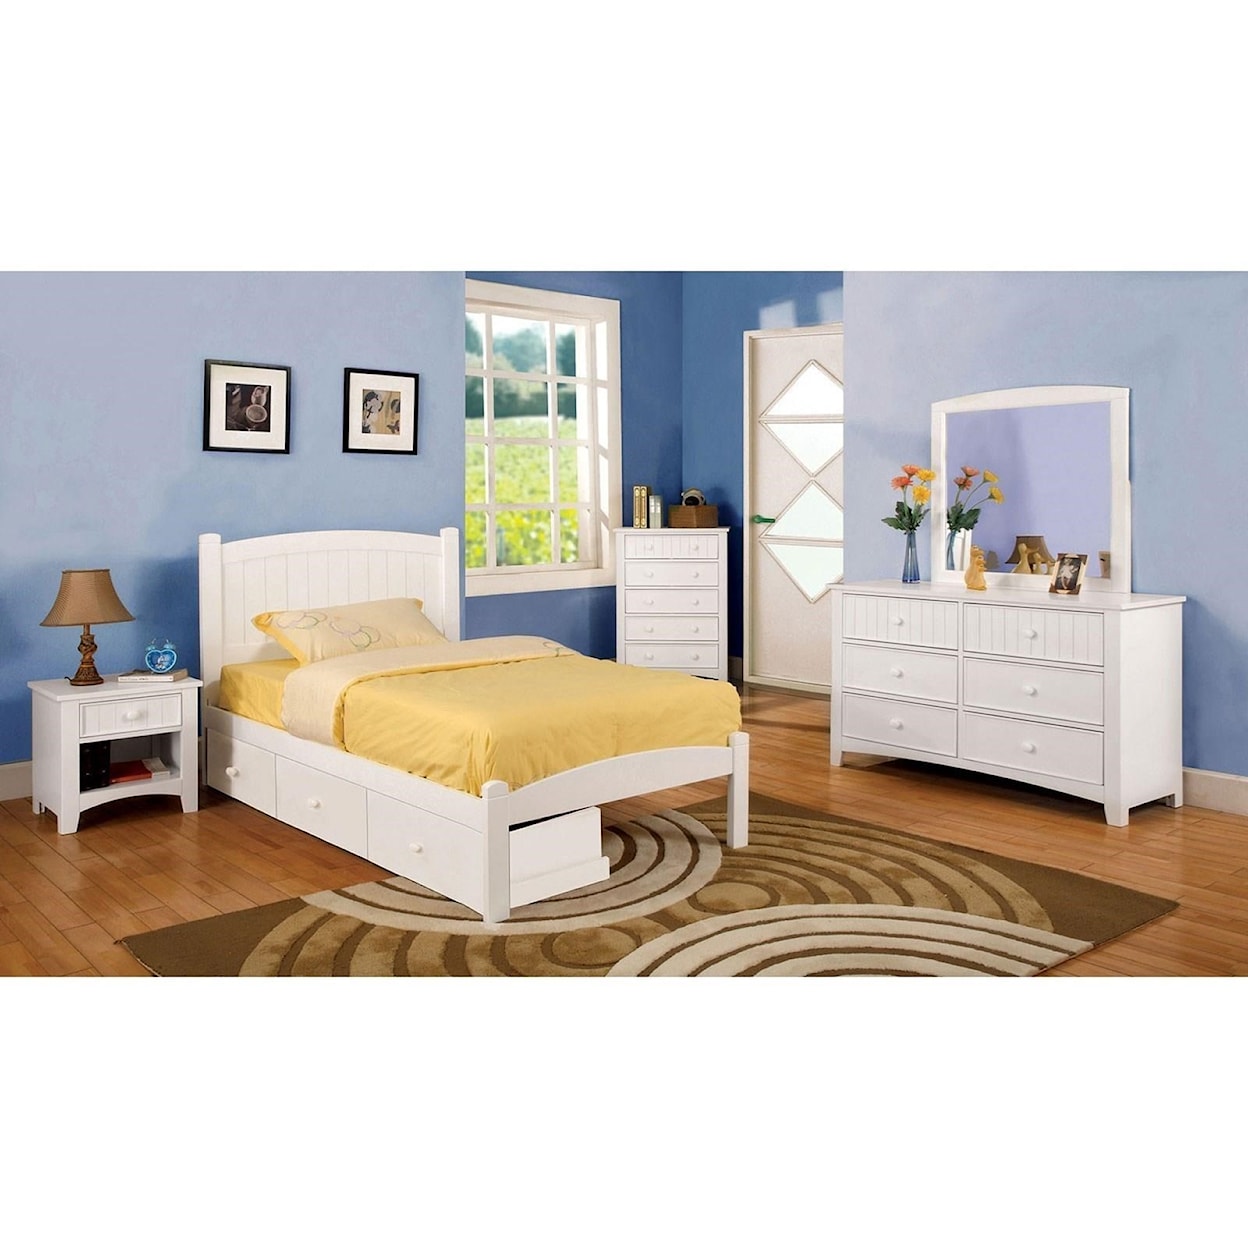 Furniture of America Caren Twin Bed